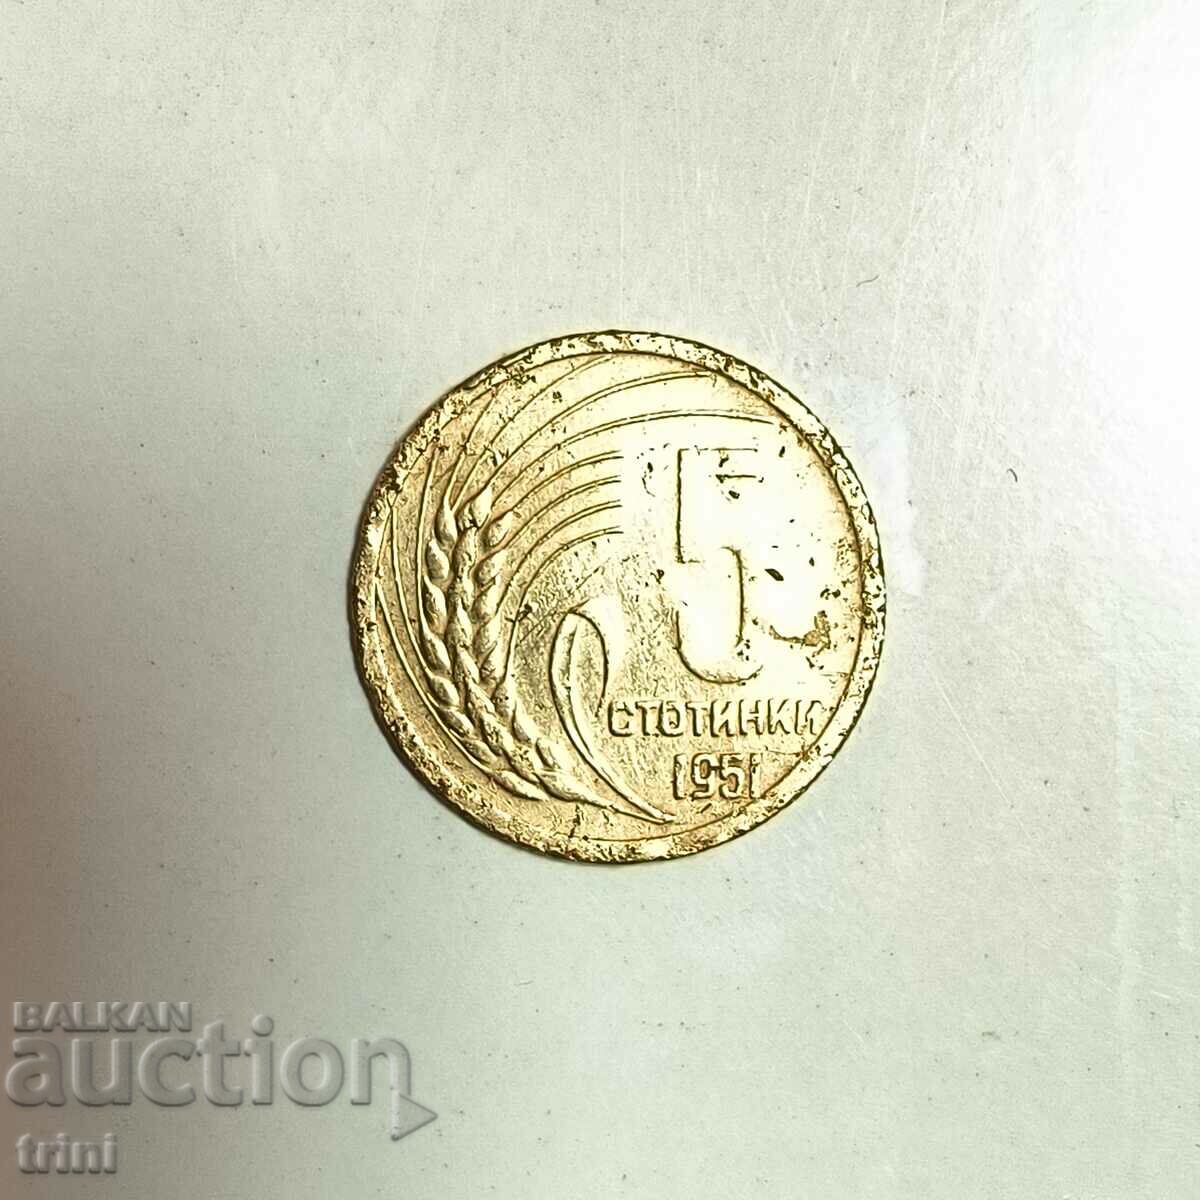 5 cents 1951 year b23